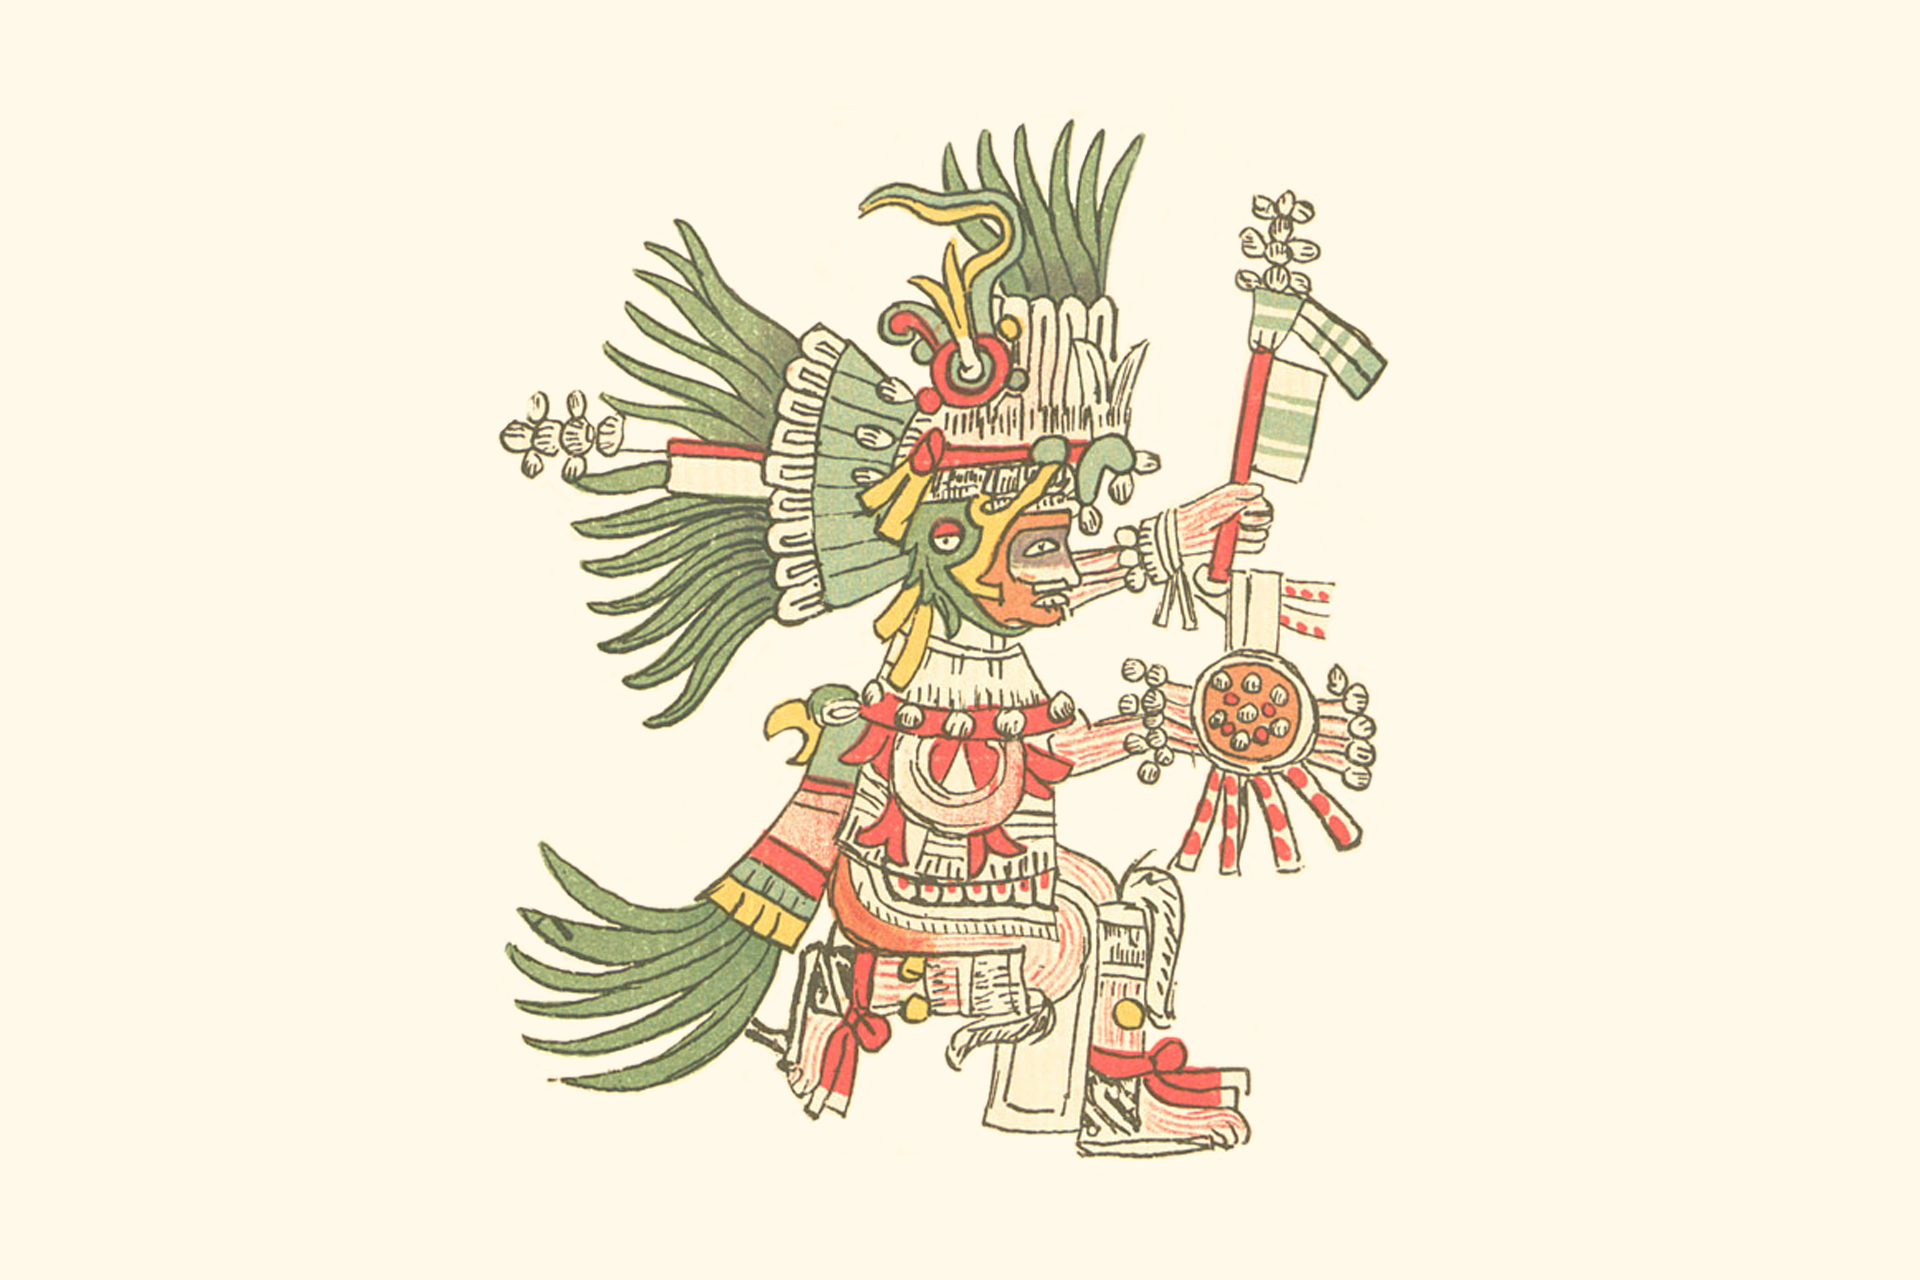 aztec symbol for creation